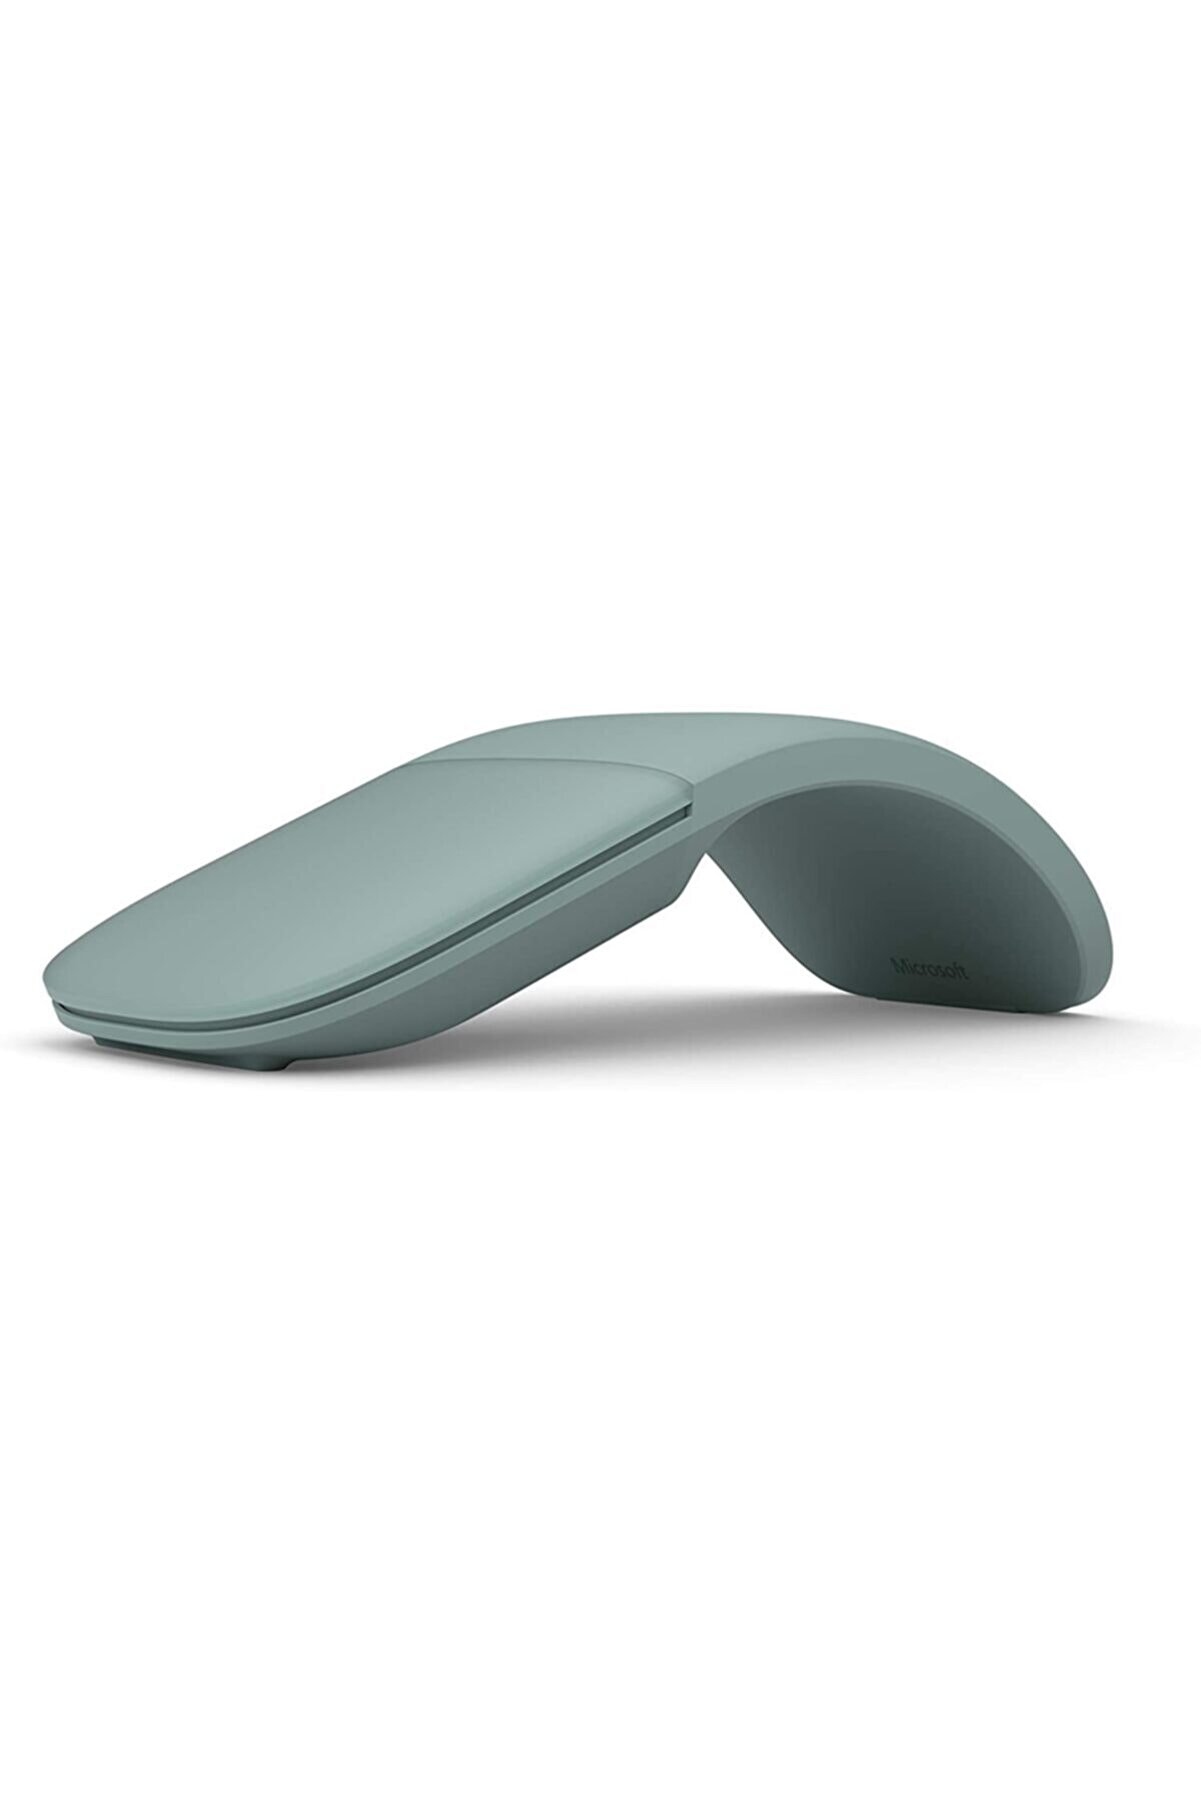 Microsoft Surface Arc Mouse Sage Yeşil